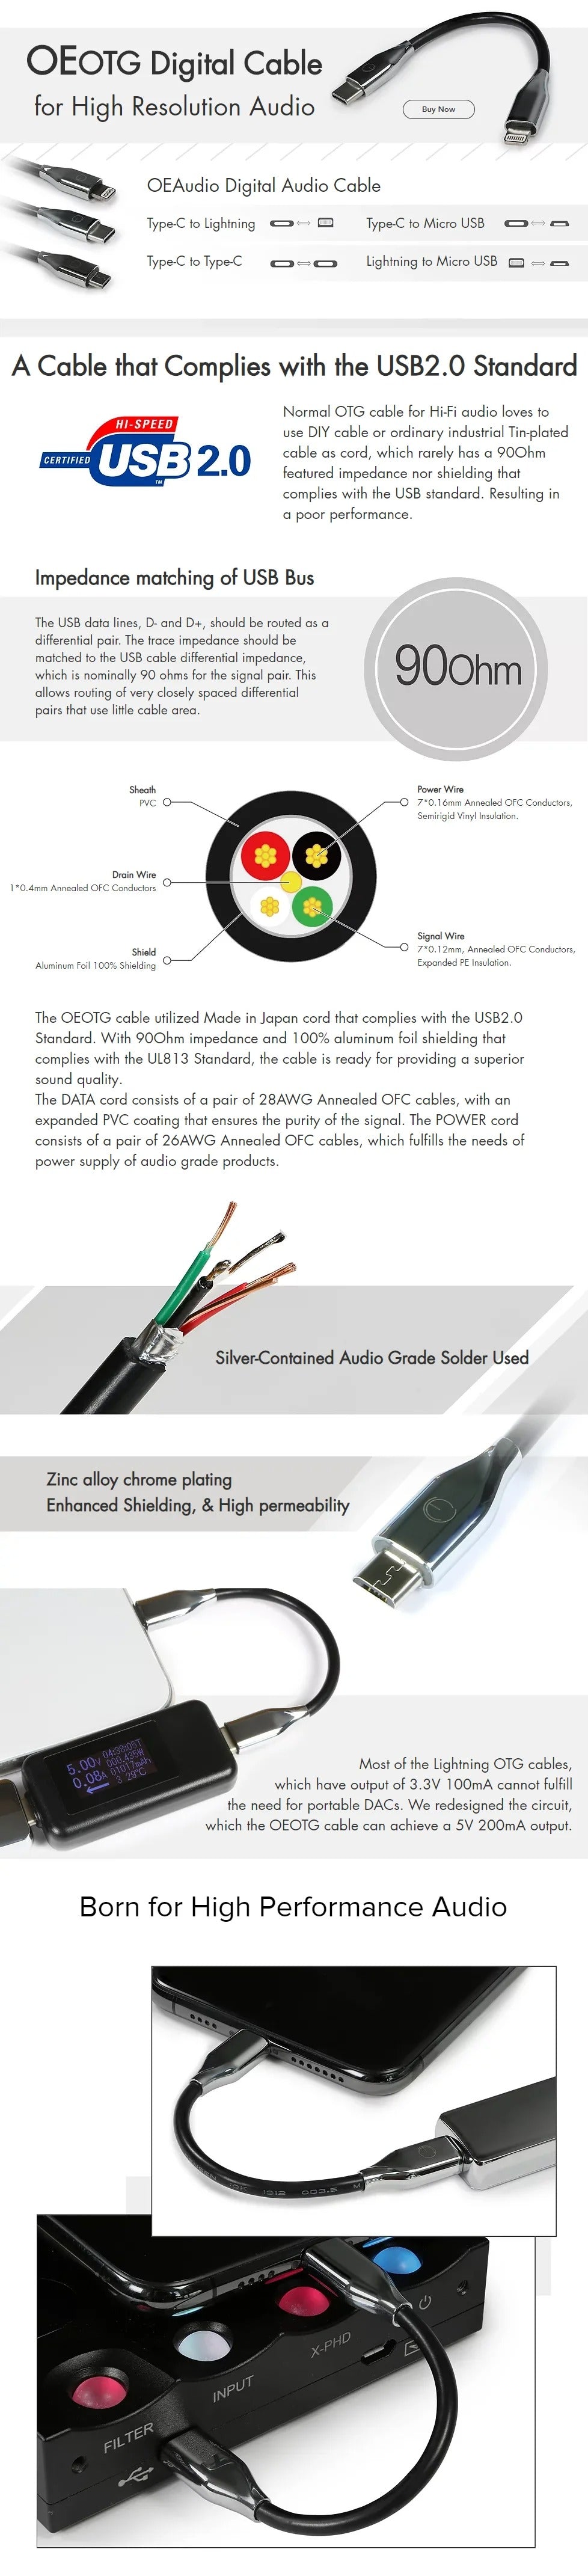 OE Audio OEOTG Digital Cable